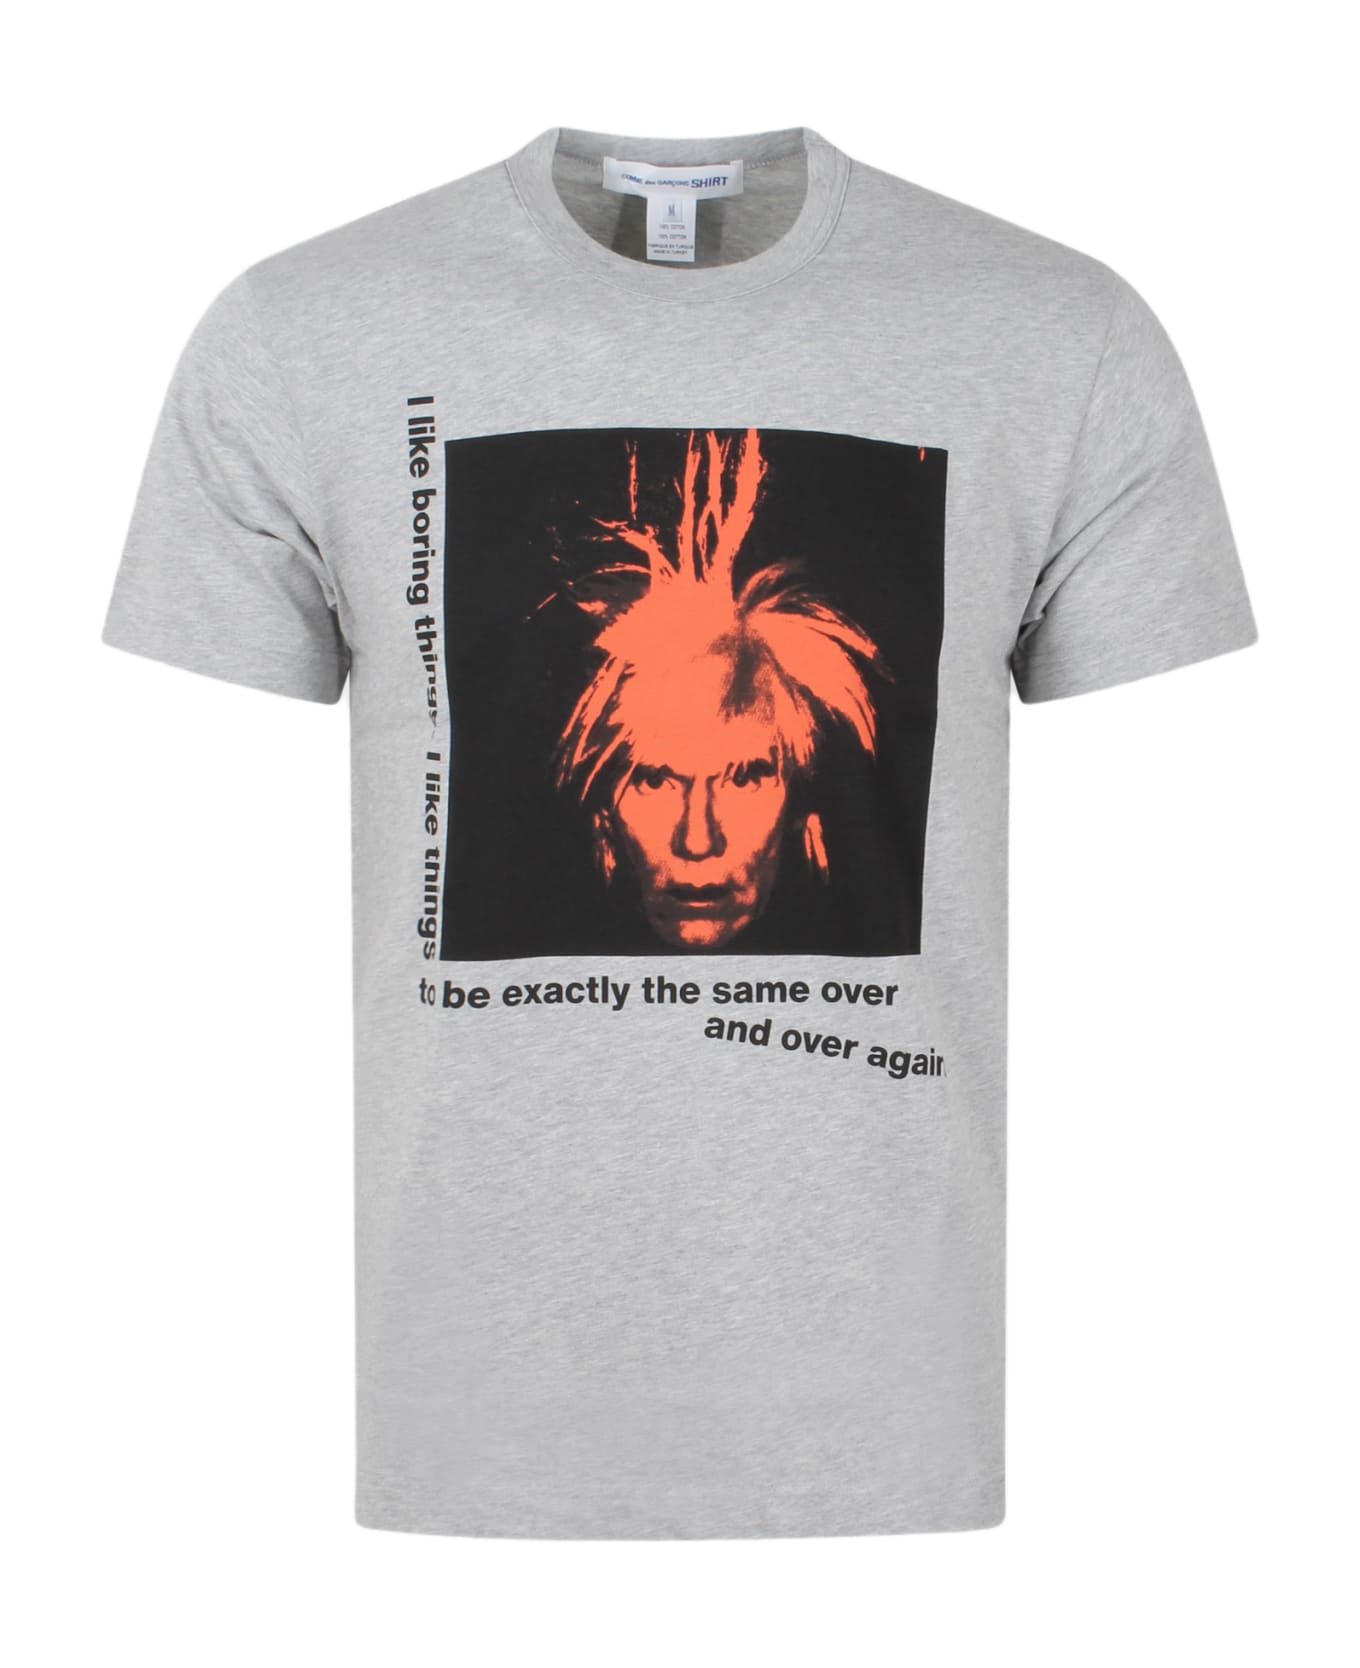 Comme des Garçons Shirt Andy Warhol T-shirt - Grey